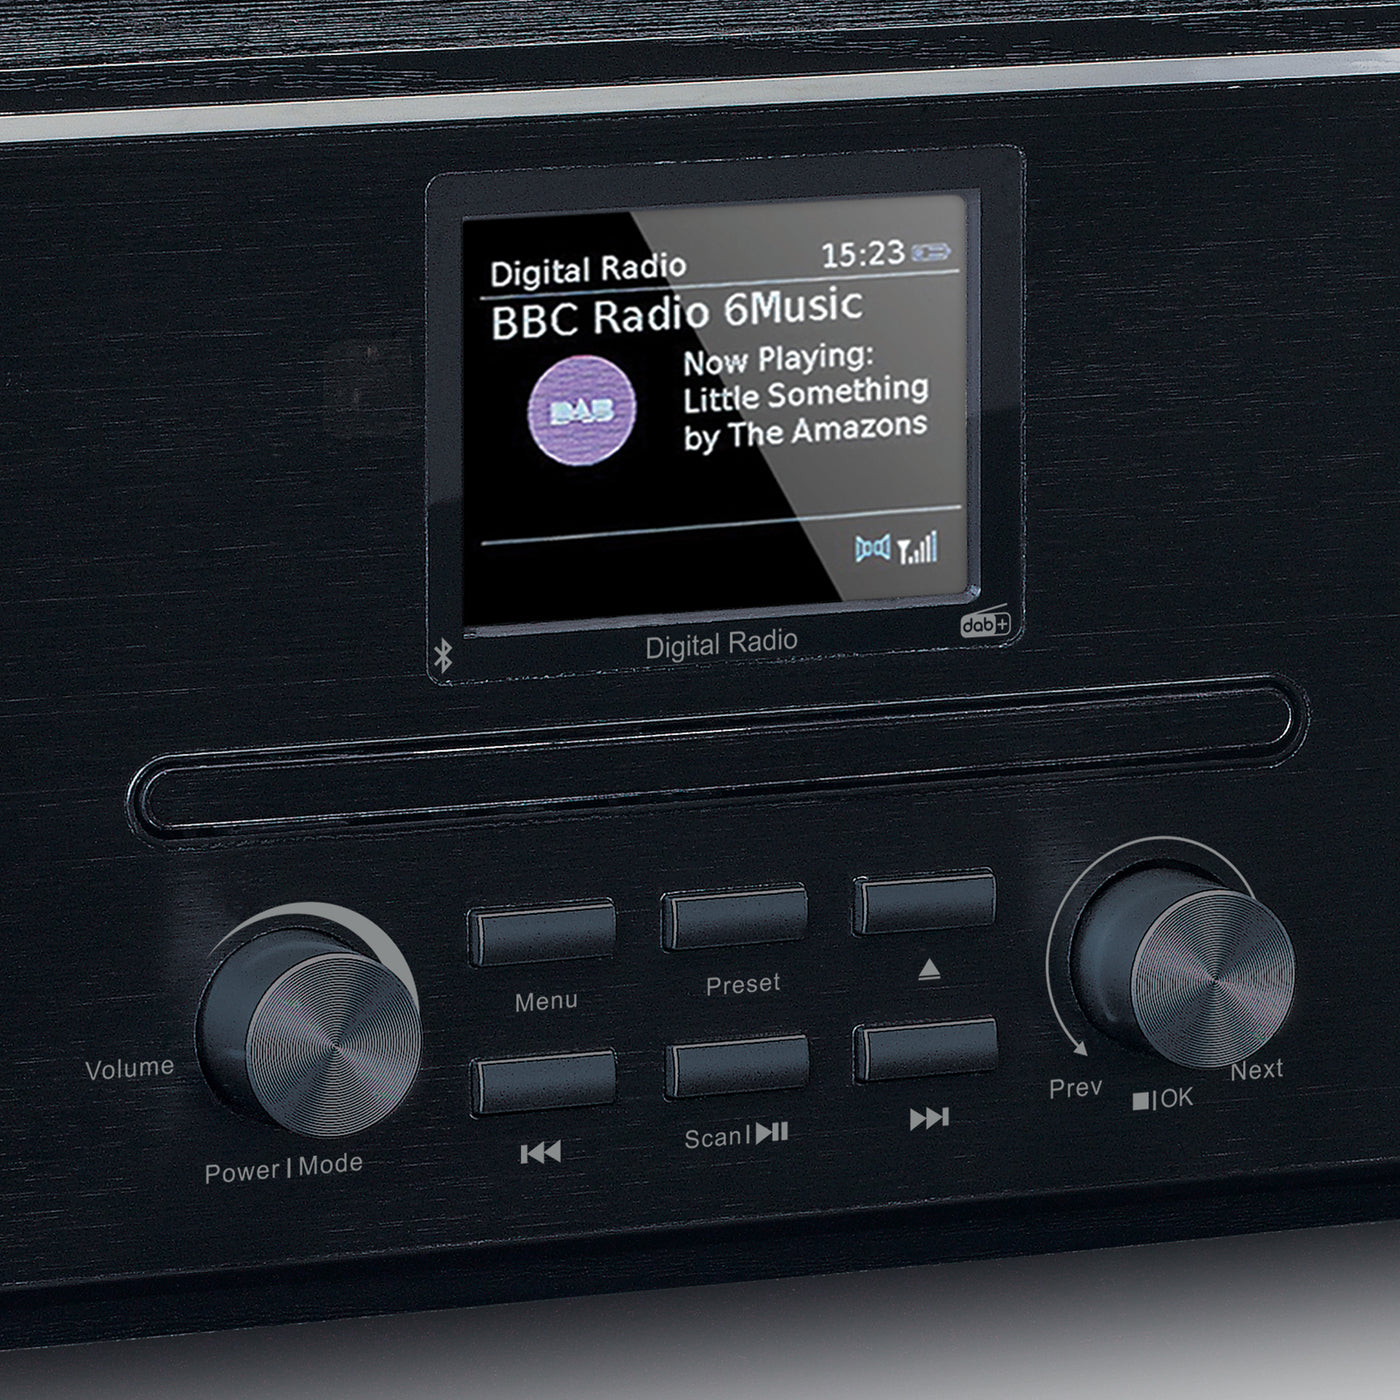 LENCO DAR-061BK - DAB+/FM radio with CD player and Bluetooth® - Black